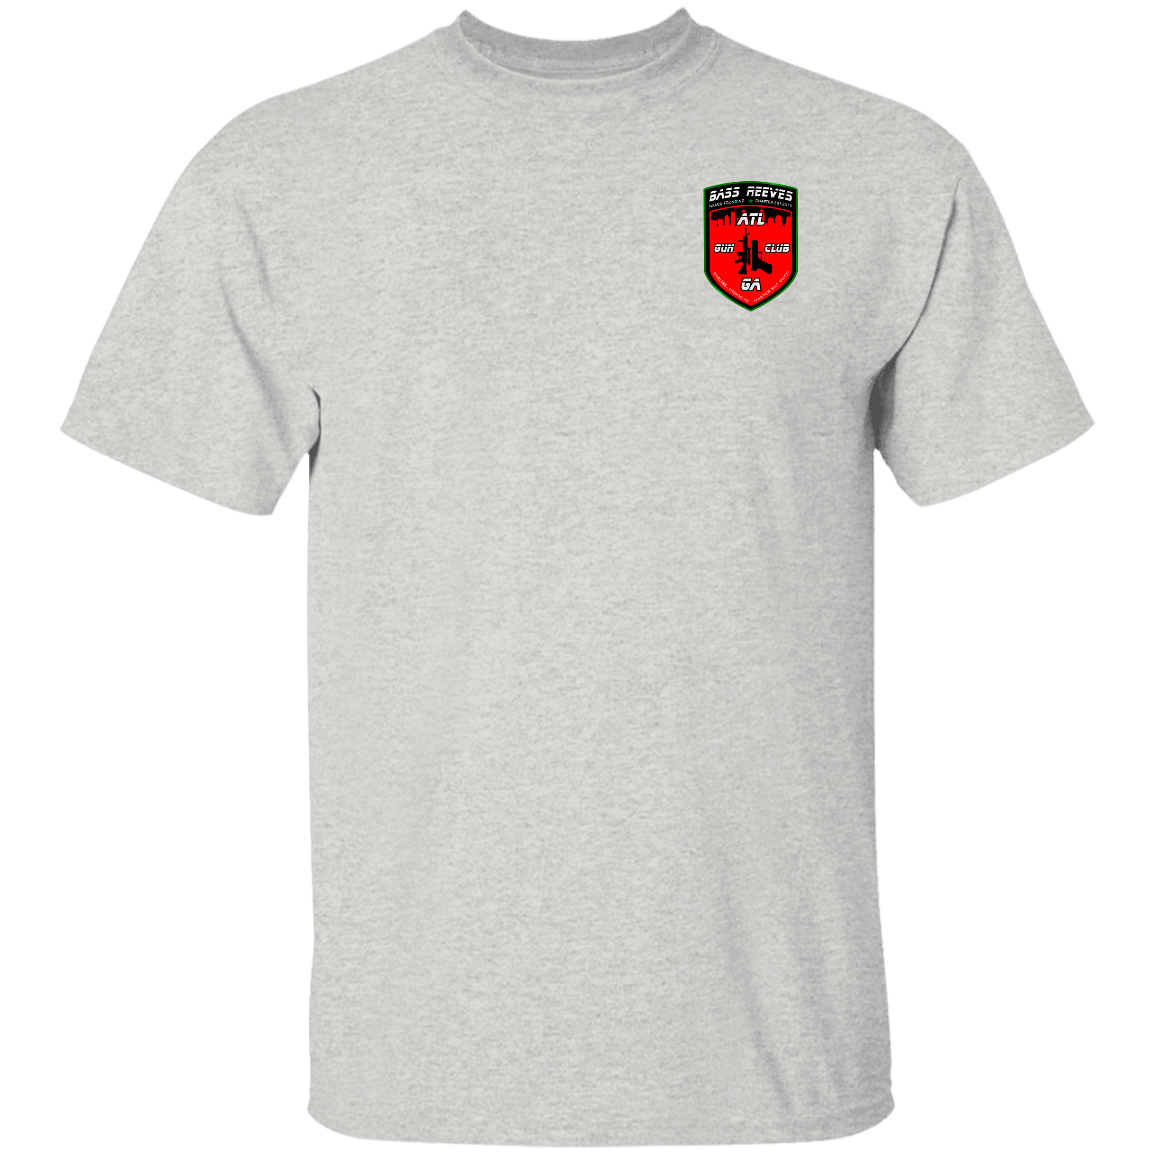 BRGC T-Shirt